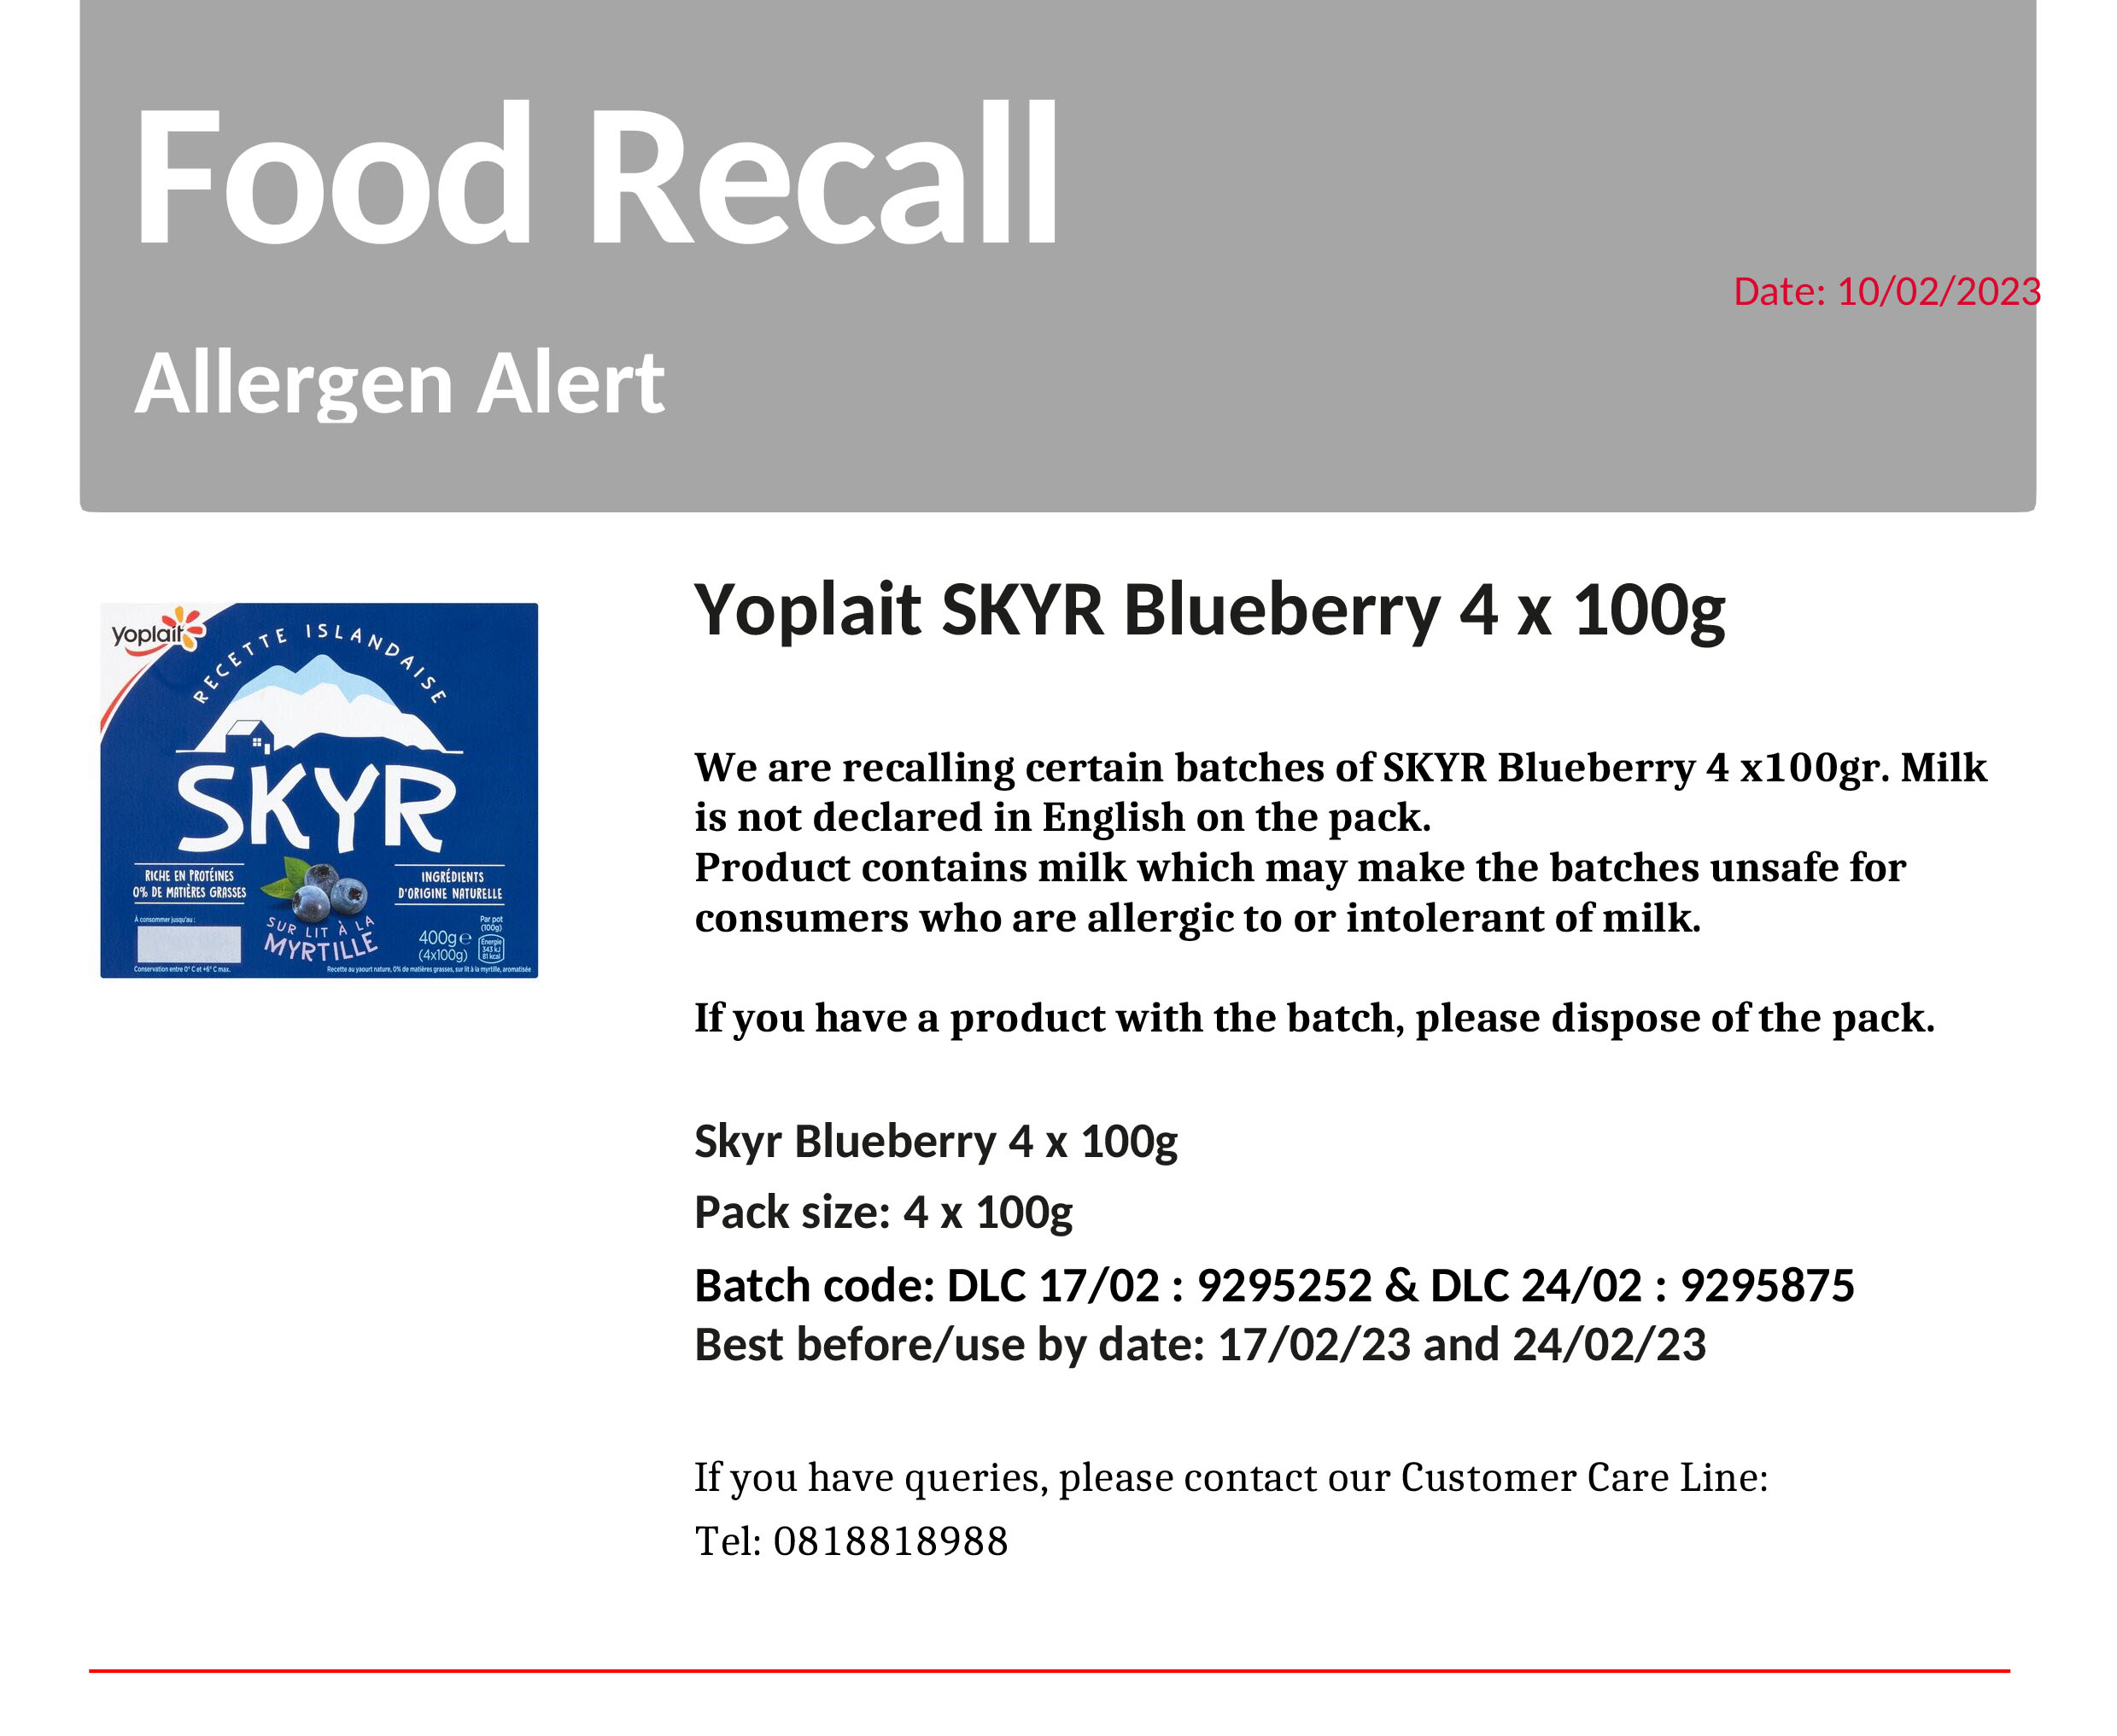 Yoplait Skyr Blueberry recall